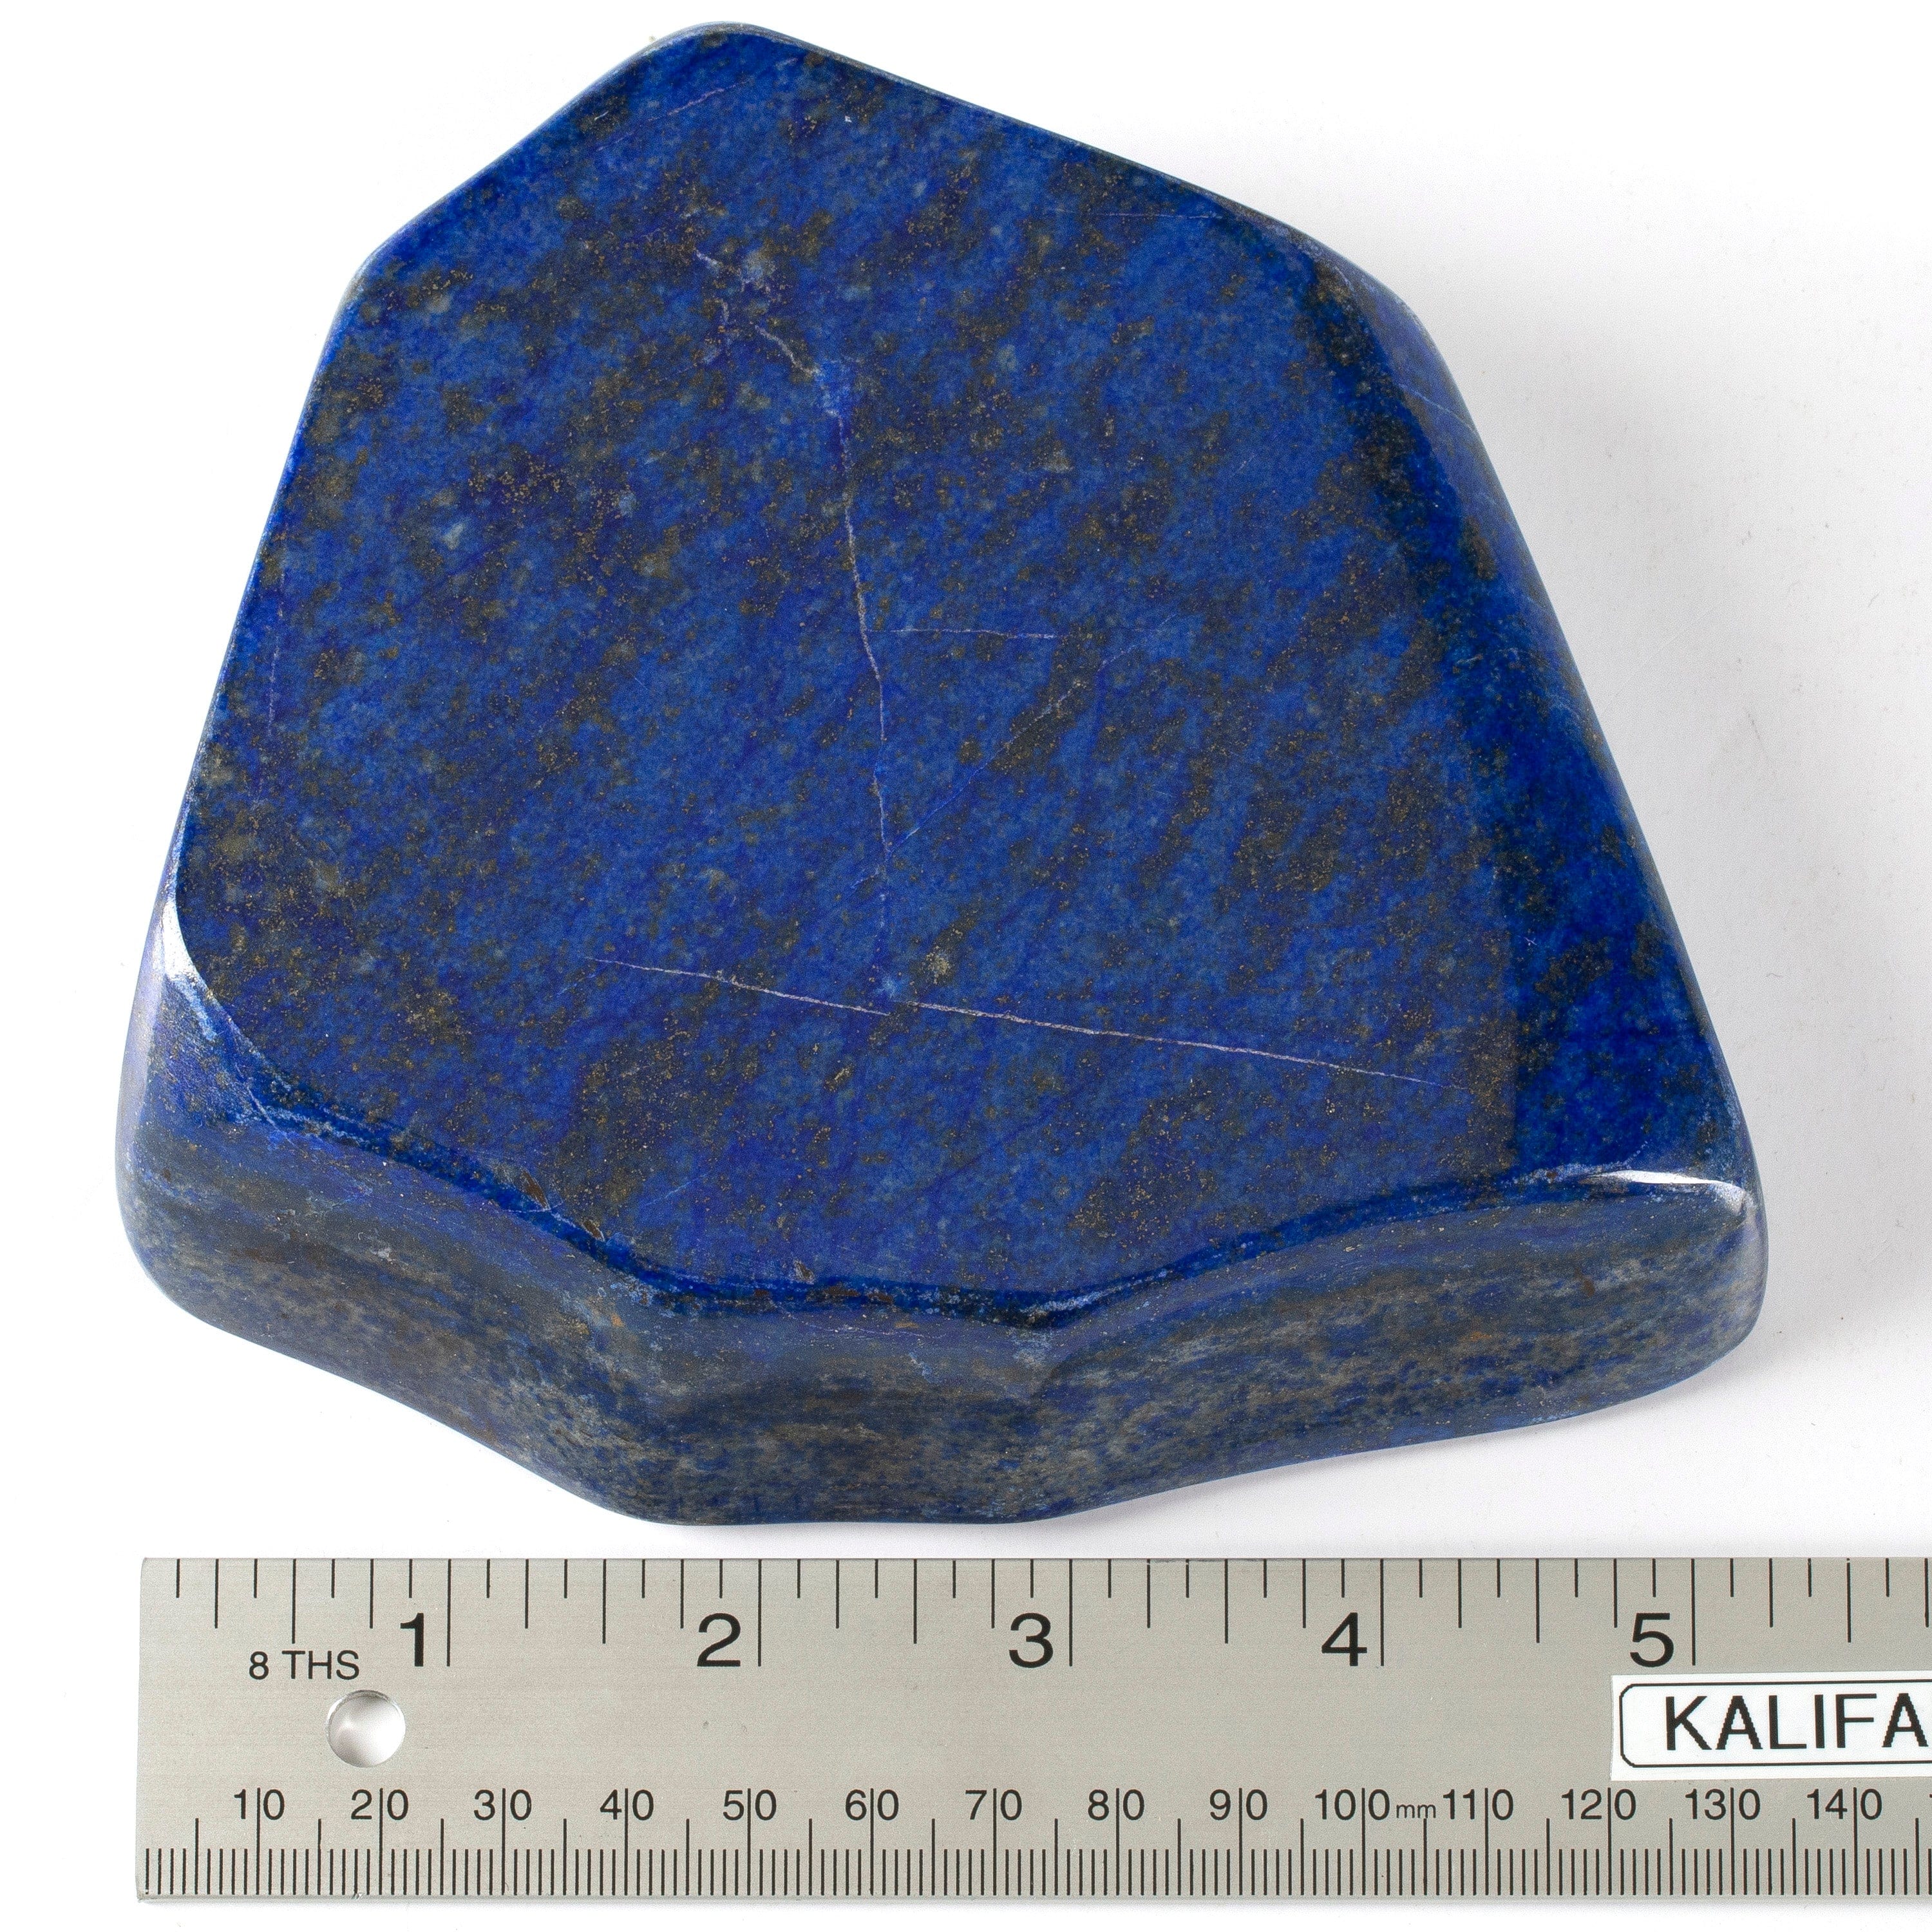 Kalifano Lapis Lapis Lazuli Freeform from Afghanistan - 5.5" / 934 grams LP950.006